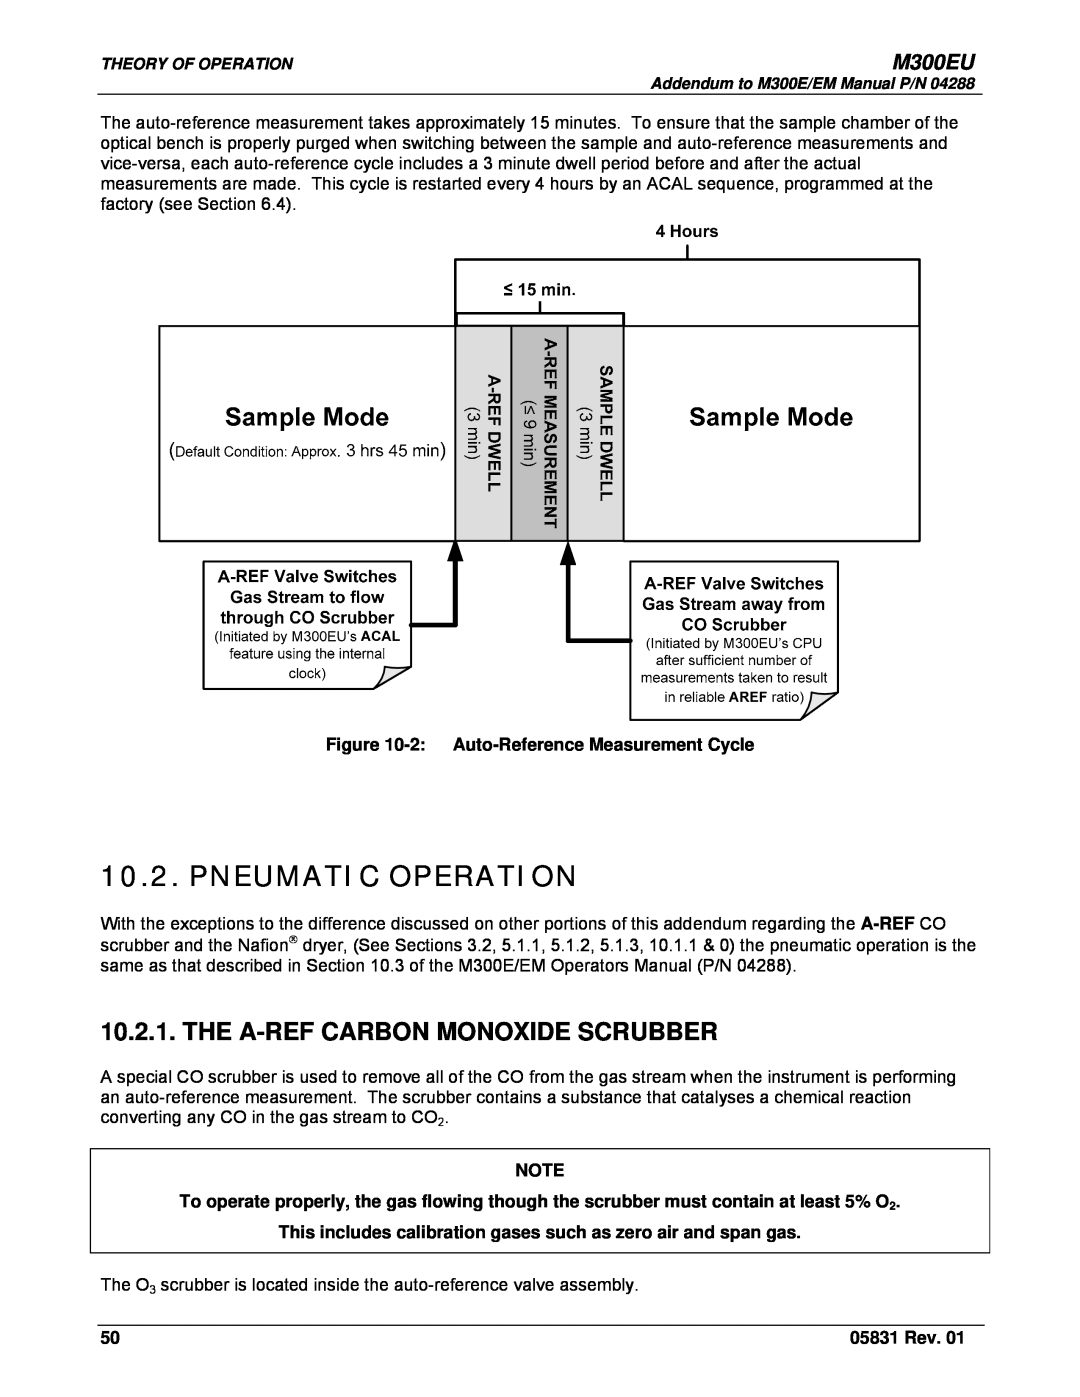 Teledyne Model 300EU Pneumatic Operation, The A-Ref Carbon Monoxide Scrubber, M300EU, 2 Auto-Reference Measurement Cycle 